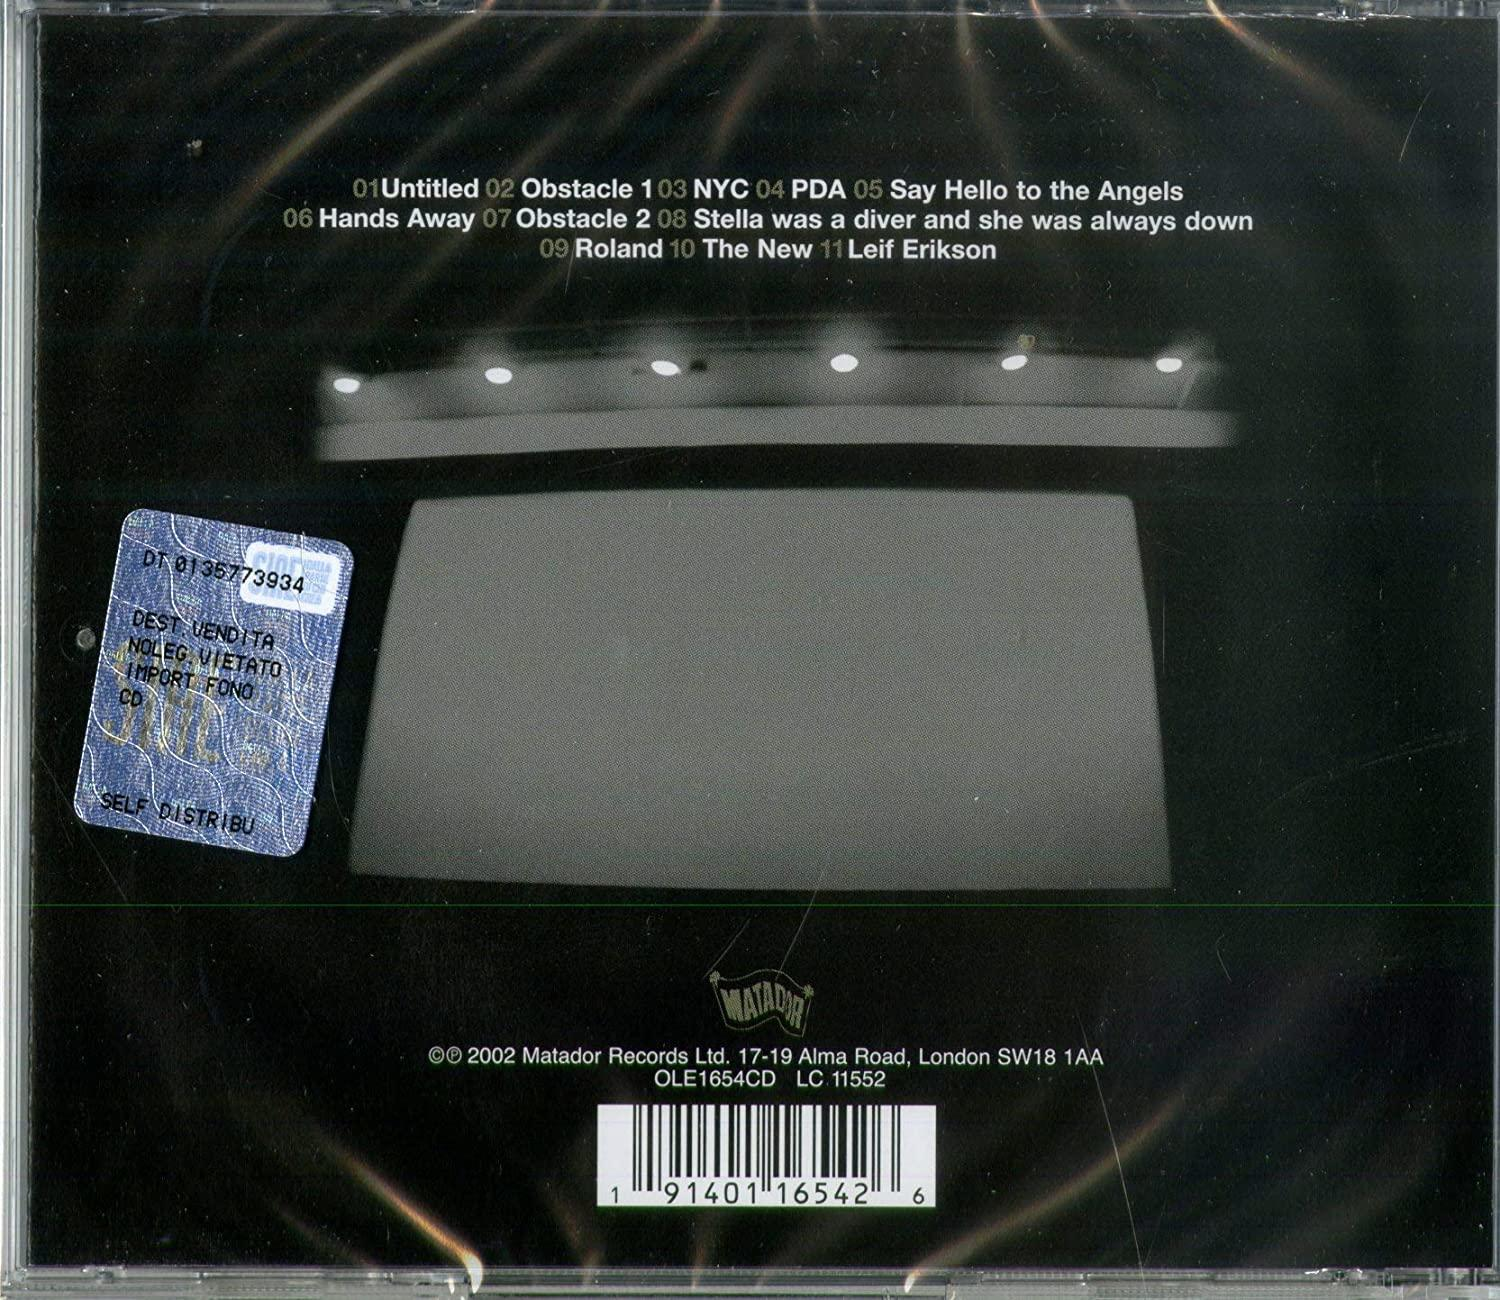 Interpol On Bright - Lights Turn The - (CD)